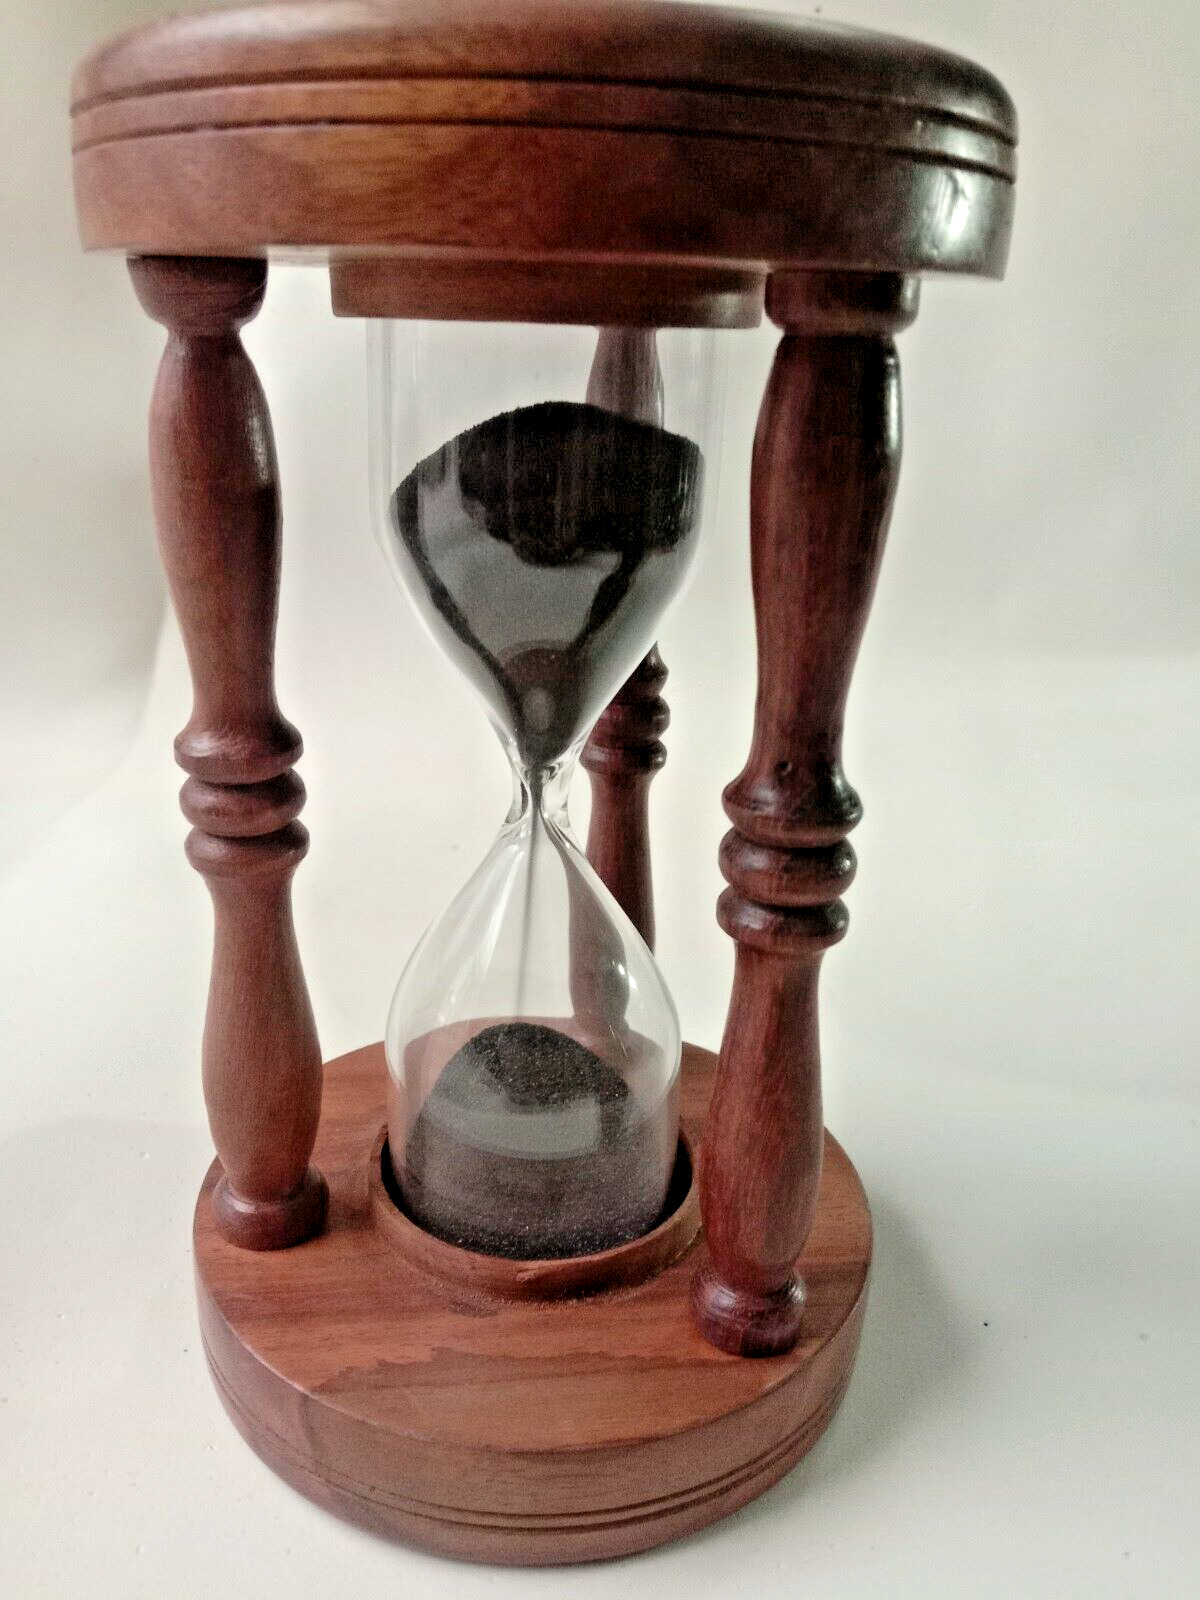 Nautical antique  5 minute hourglas sand timer clock ideal for decoritve gif etc